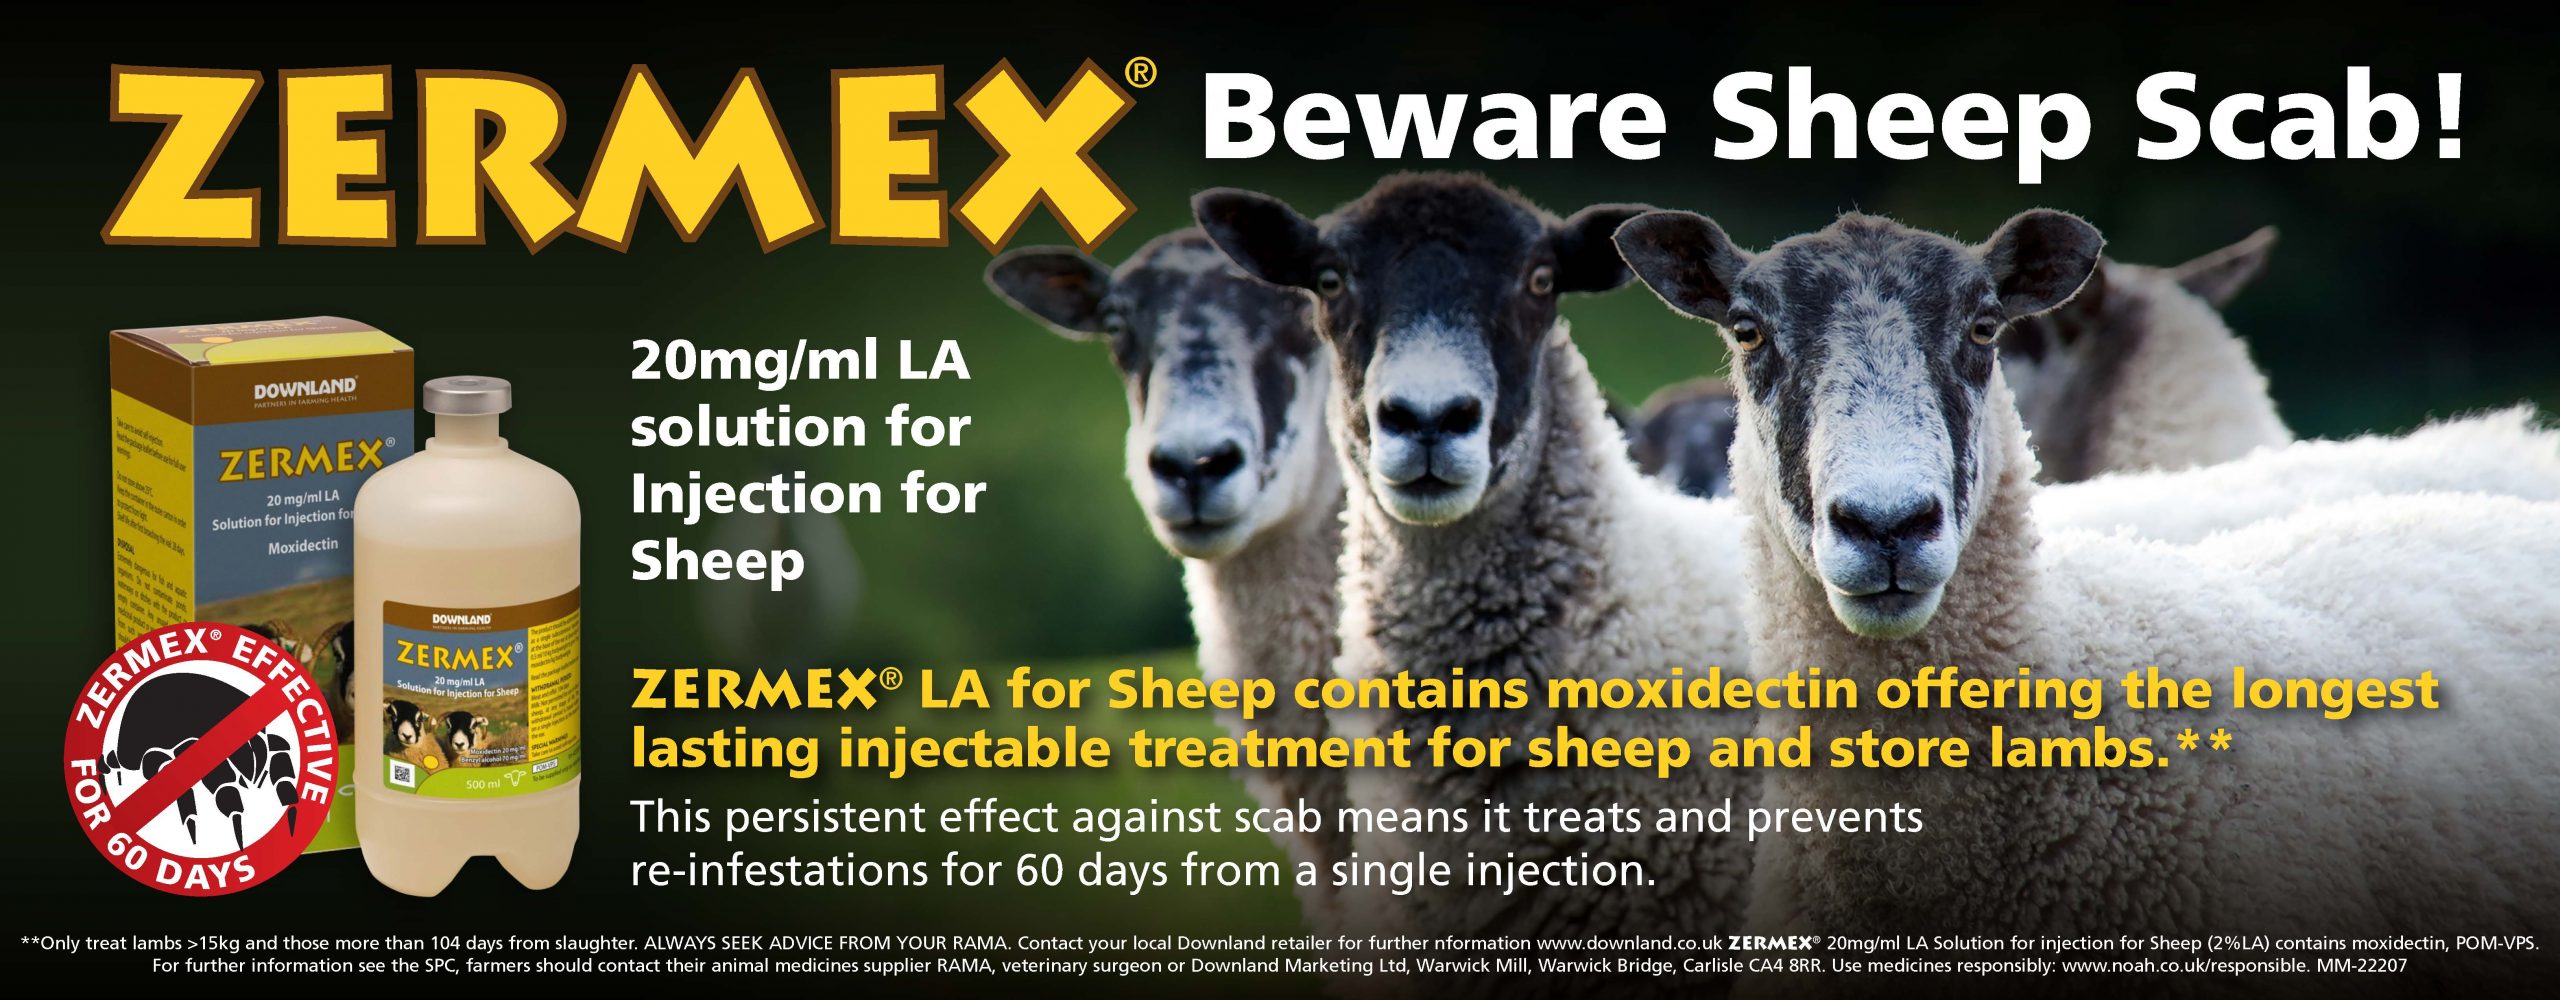 Zermex for sheep